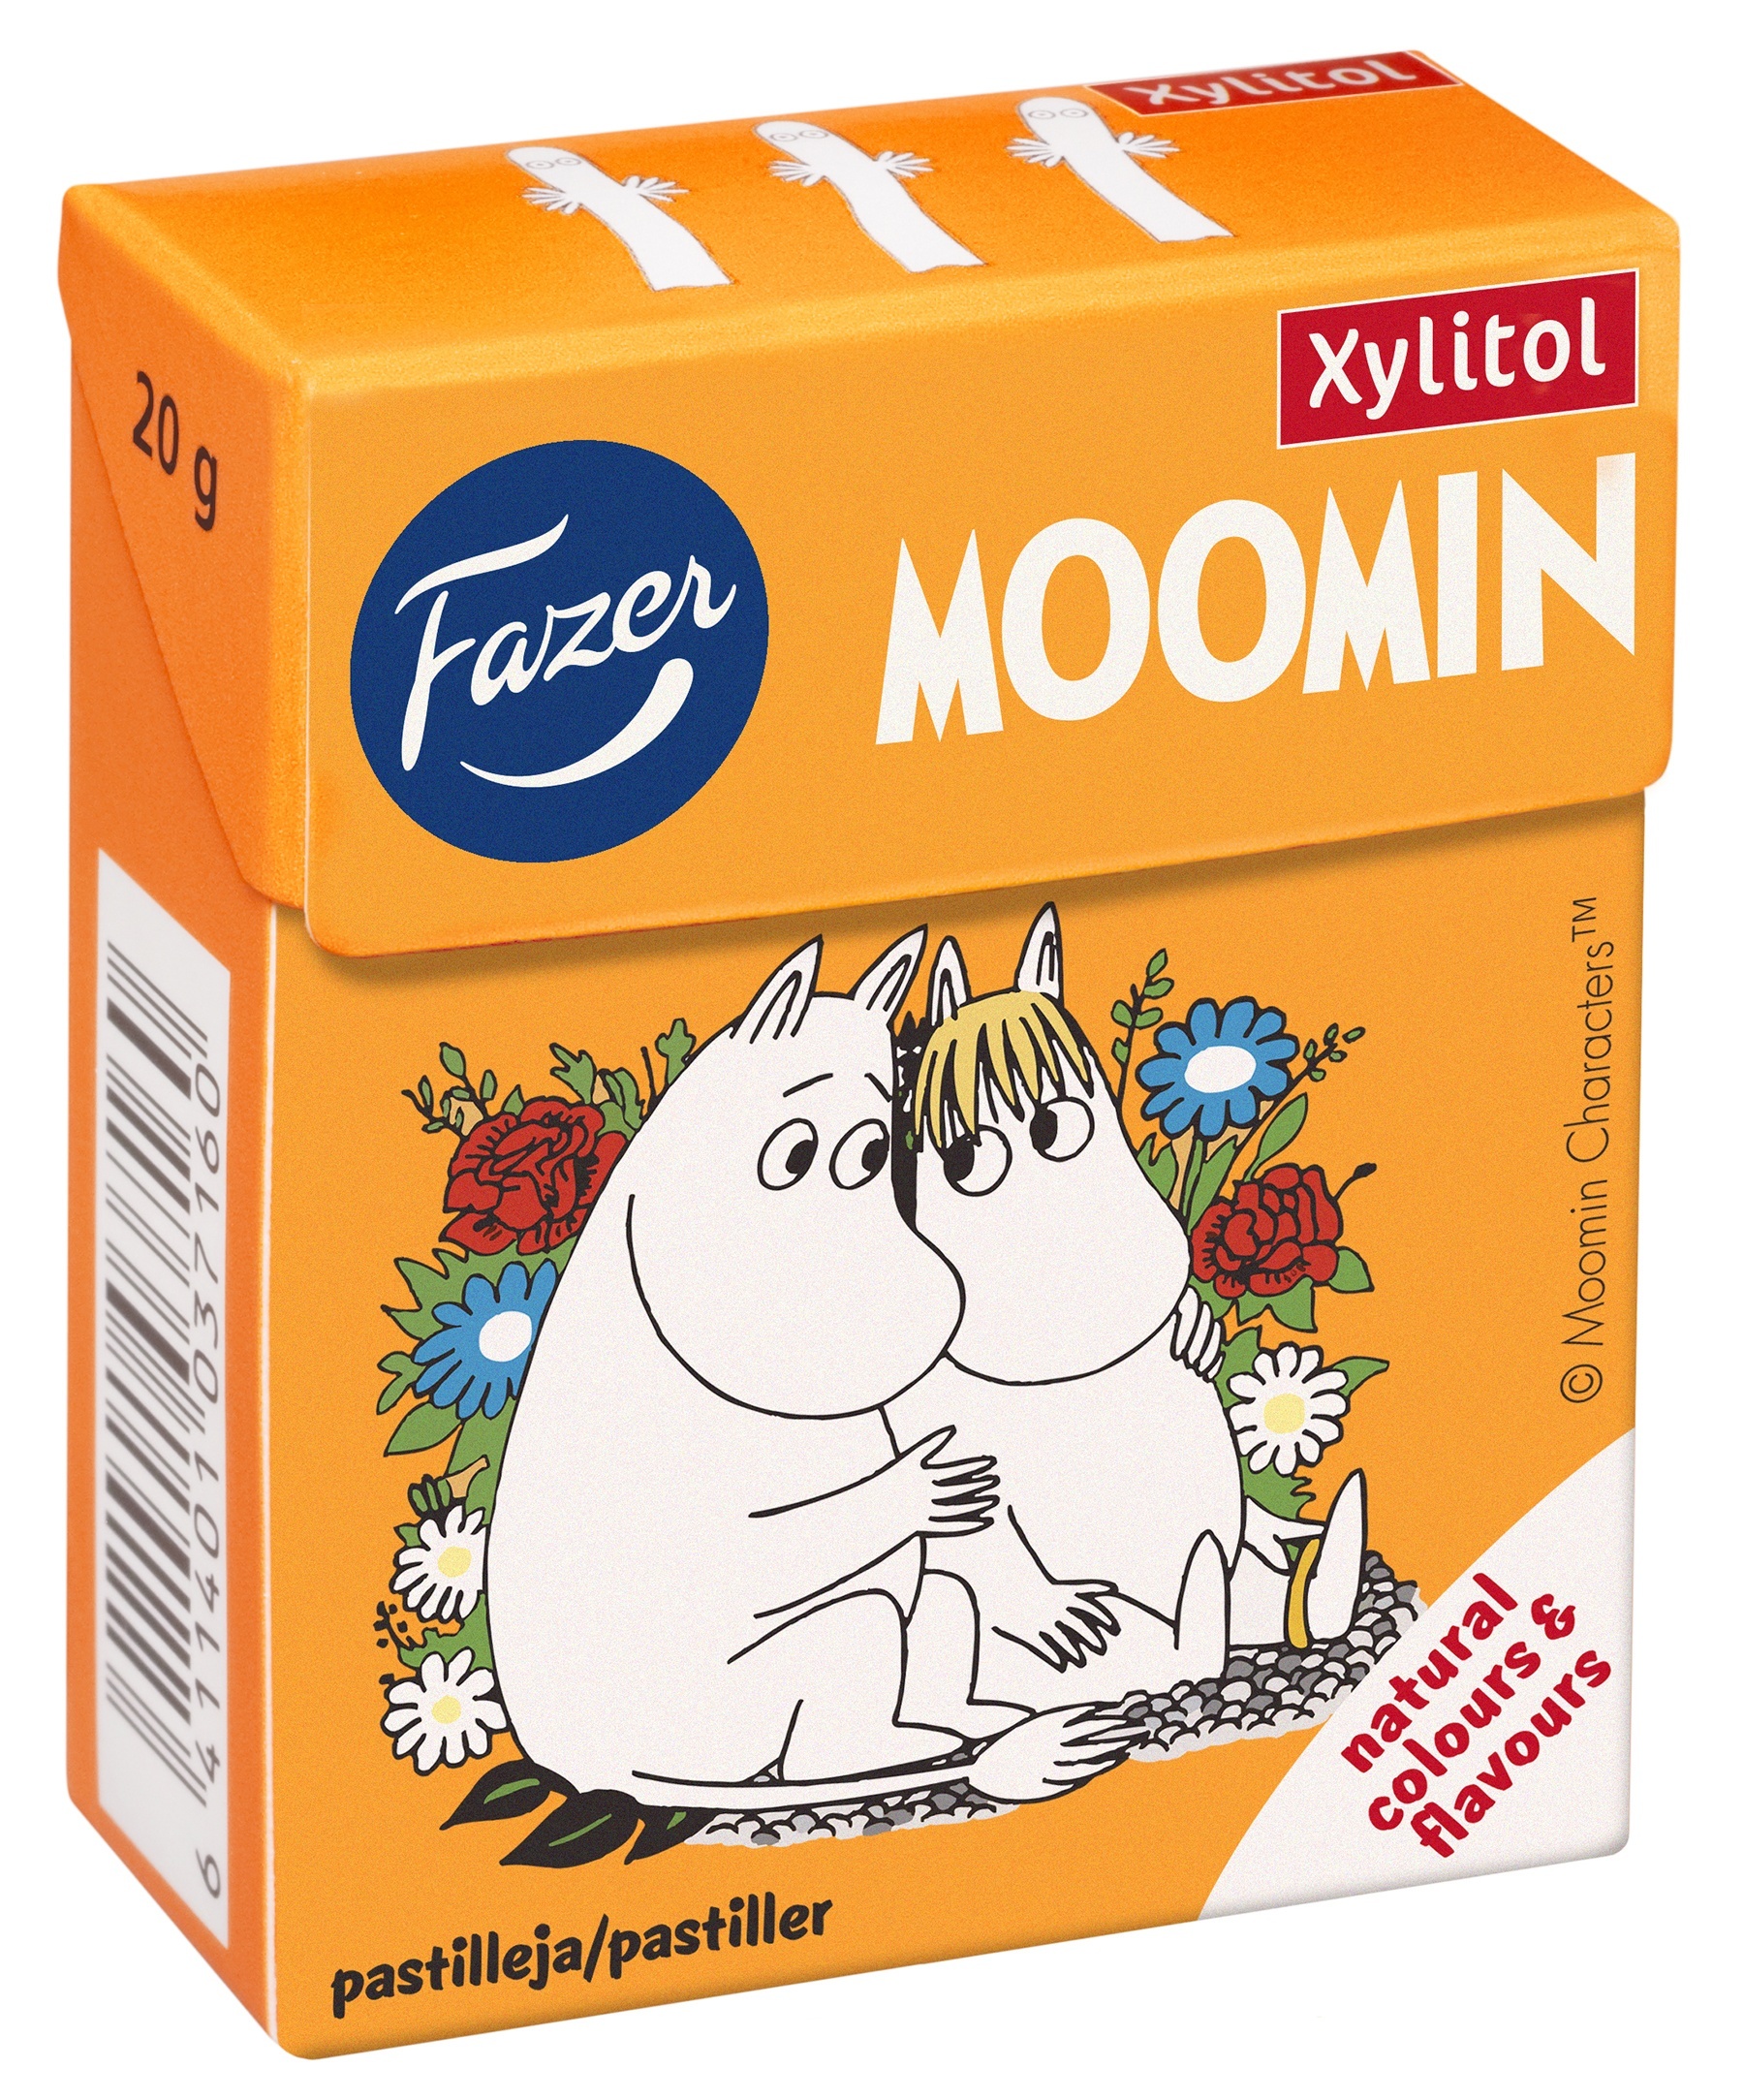 Fazer Moomin soft xylitol pastilles in 20 g box